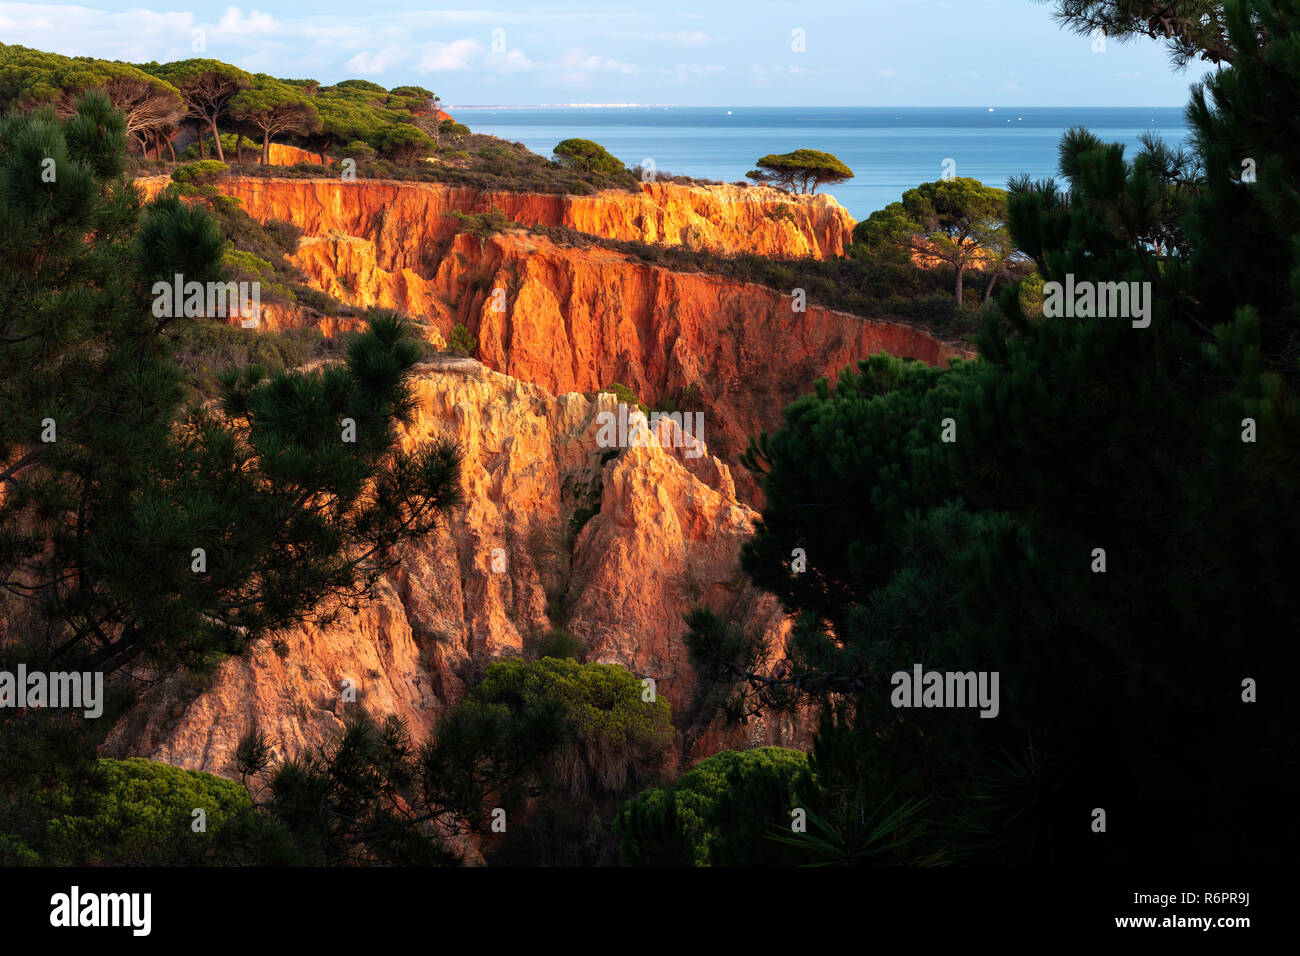 Las rocas de piedra arenisca roja y de pinos, acantilados, Praia da Falesia, Ohlhos de agua, Albufeira, Algarve, Portugal Foto de stock